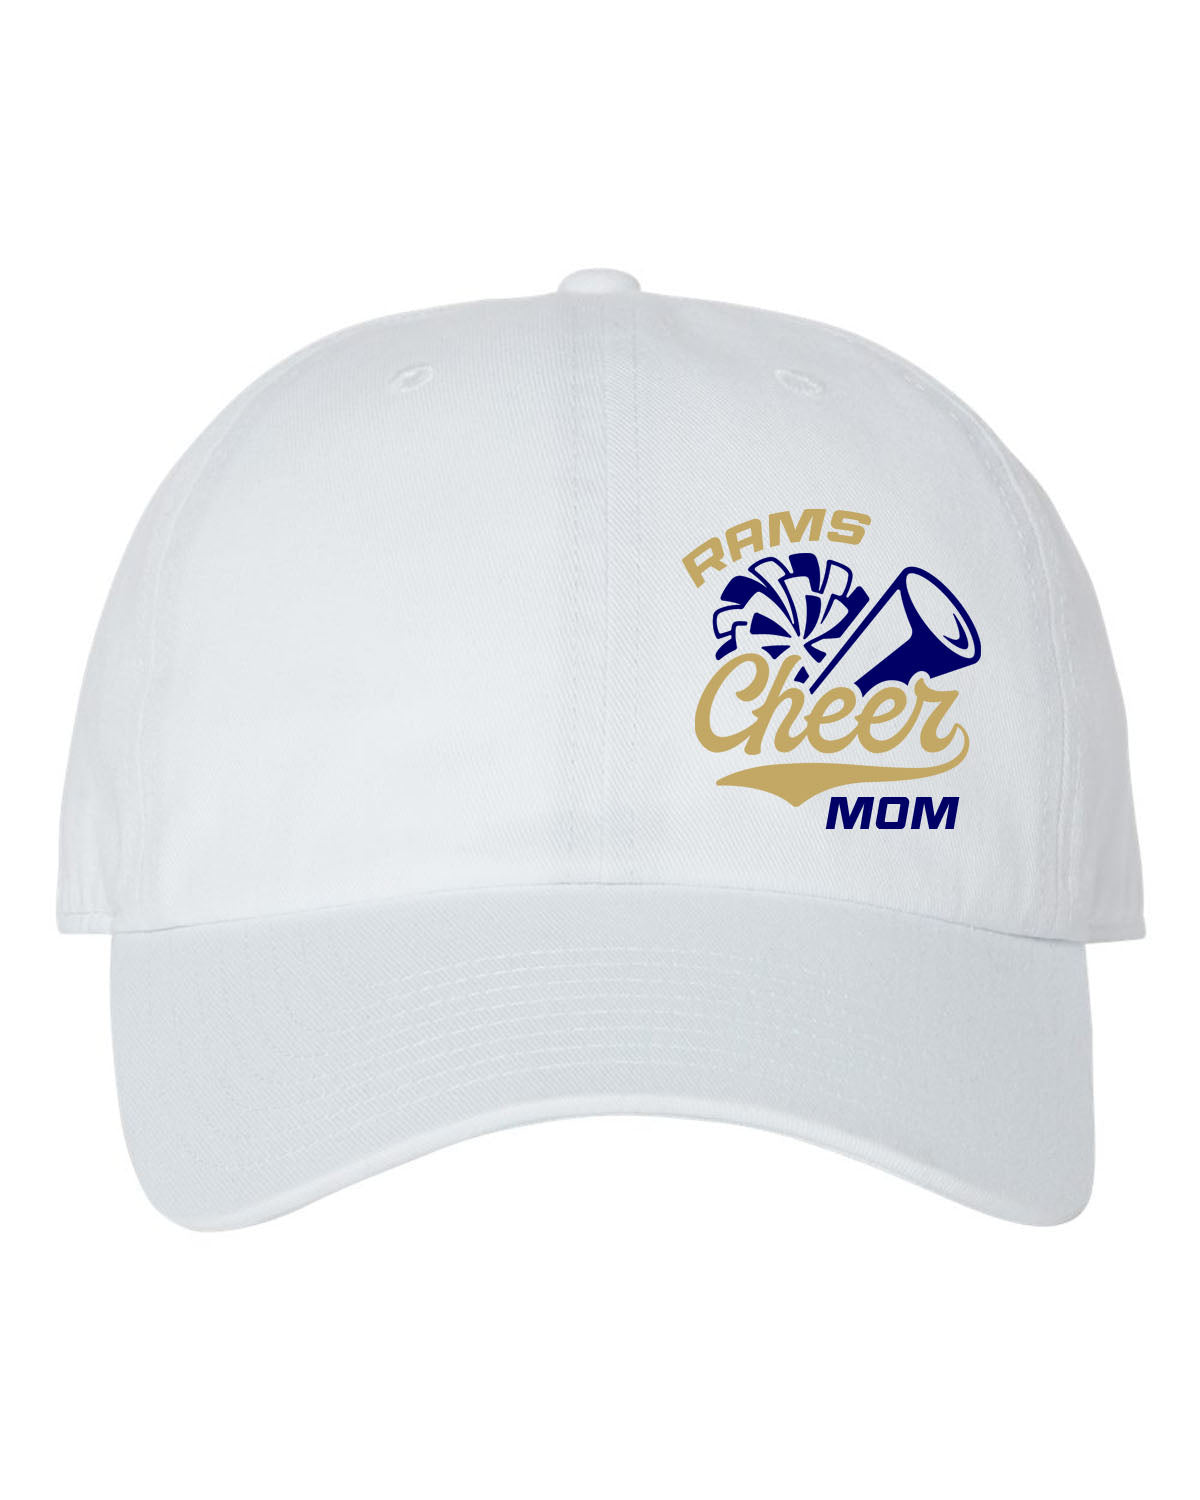 Sussex Middle Cheer Design 1 Trucker Hat